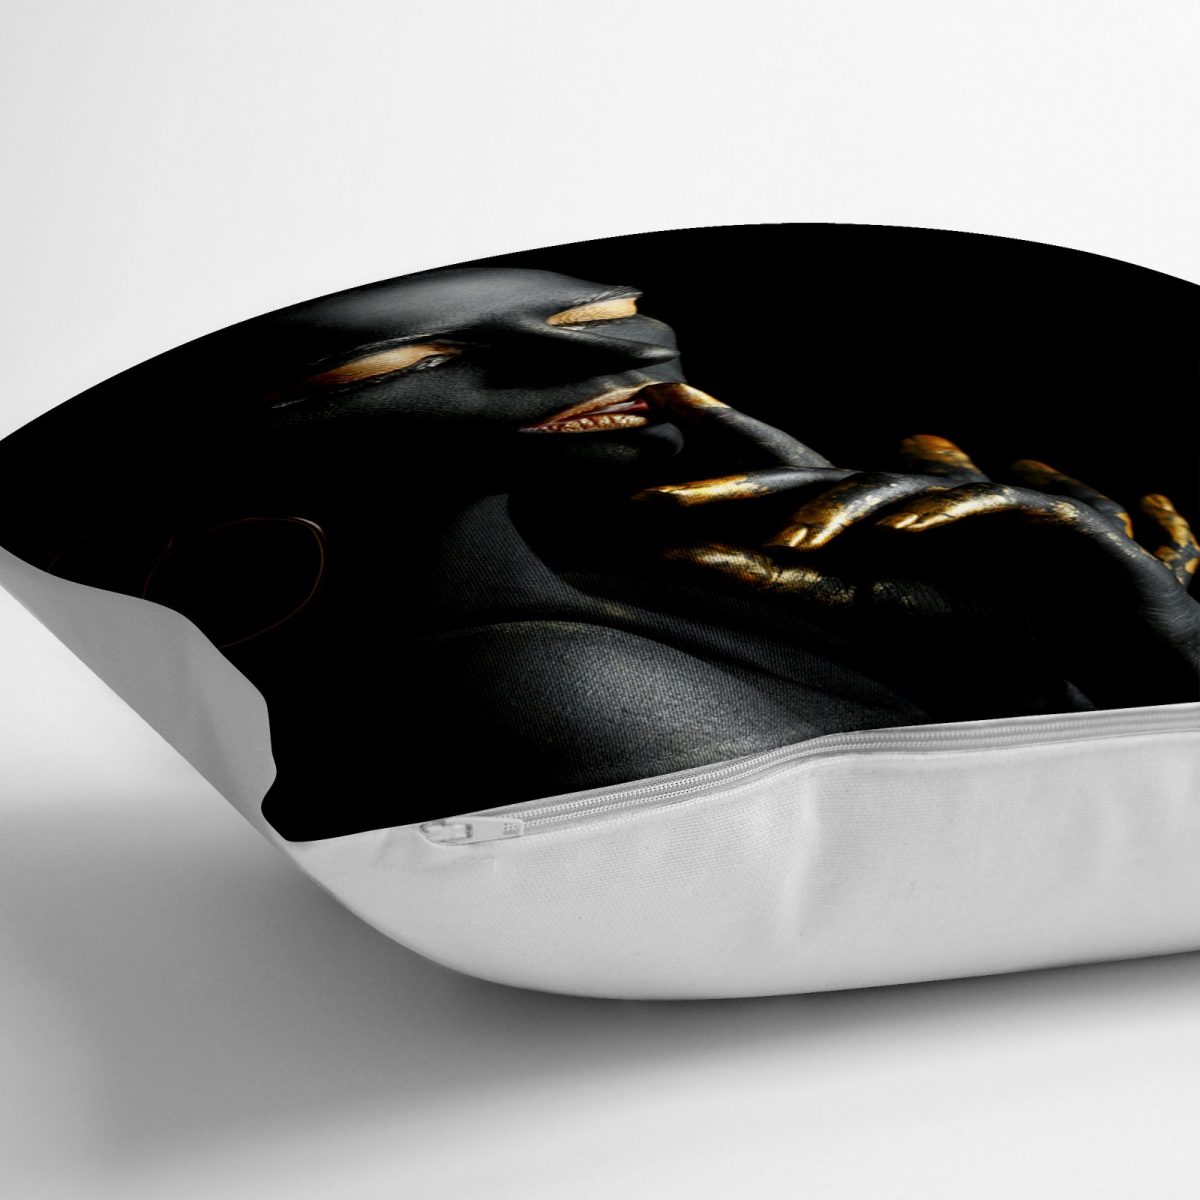 Siyahı Kadın Motifli Özel Tasarım Yer Minderi - 70 x 70 cm Realhomes